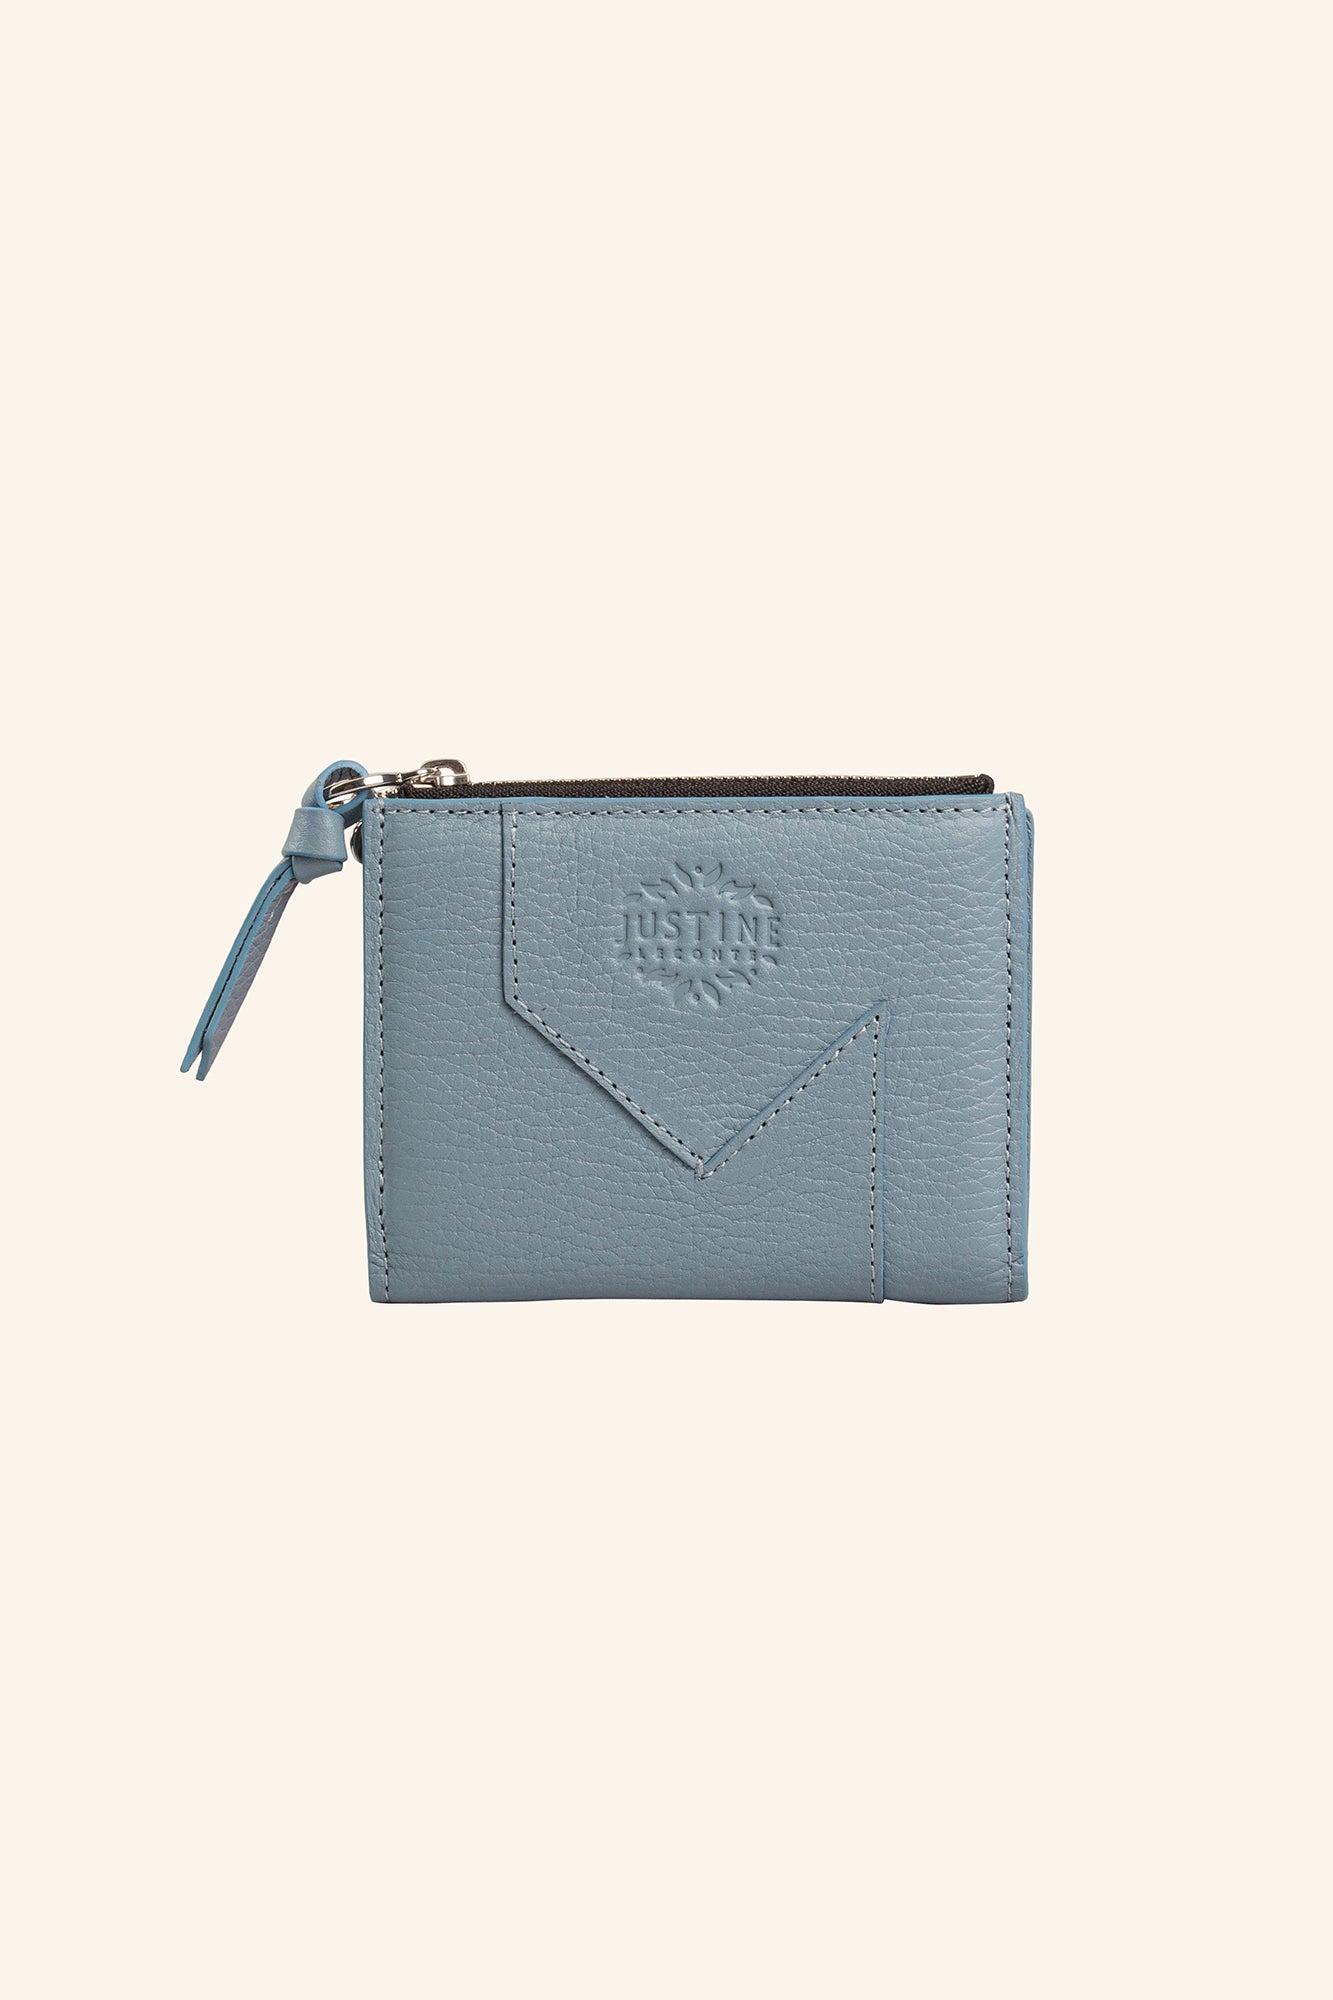 JL wallet leather - Stone blue